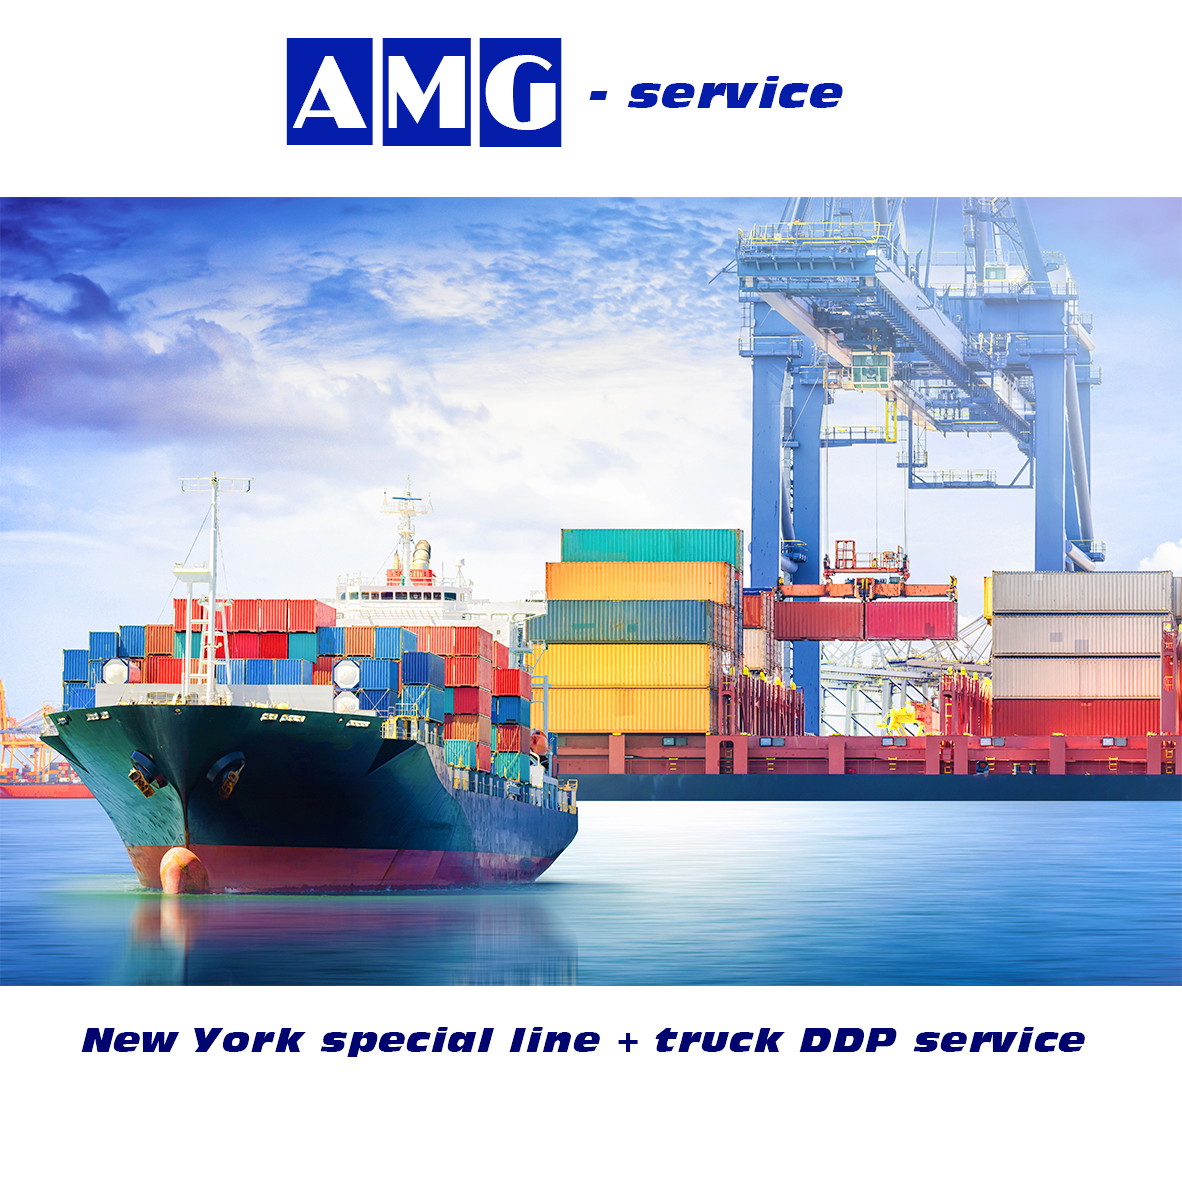 AMG New York sea+truck DDP service